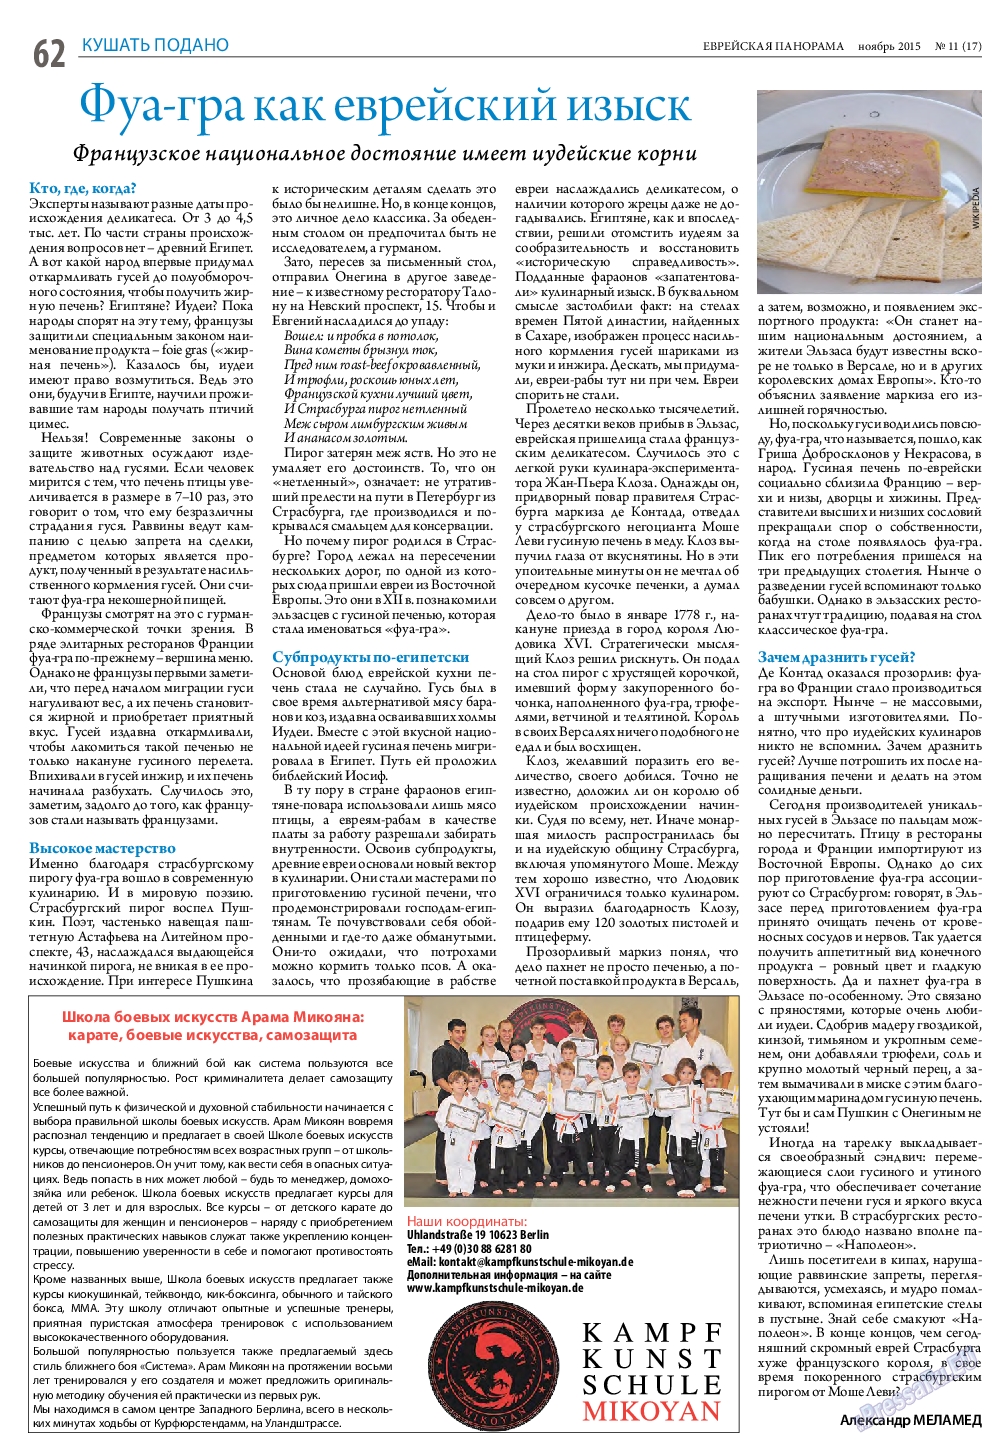 Еврейская панорама, газета. 2015 №11 стр.62